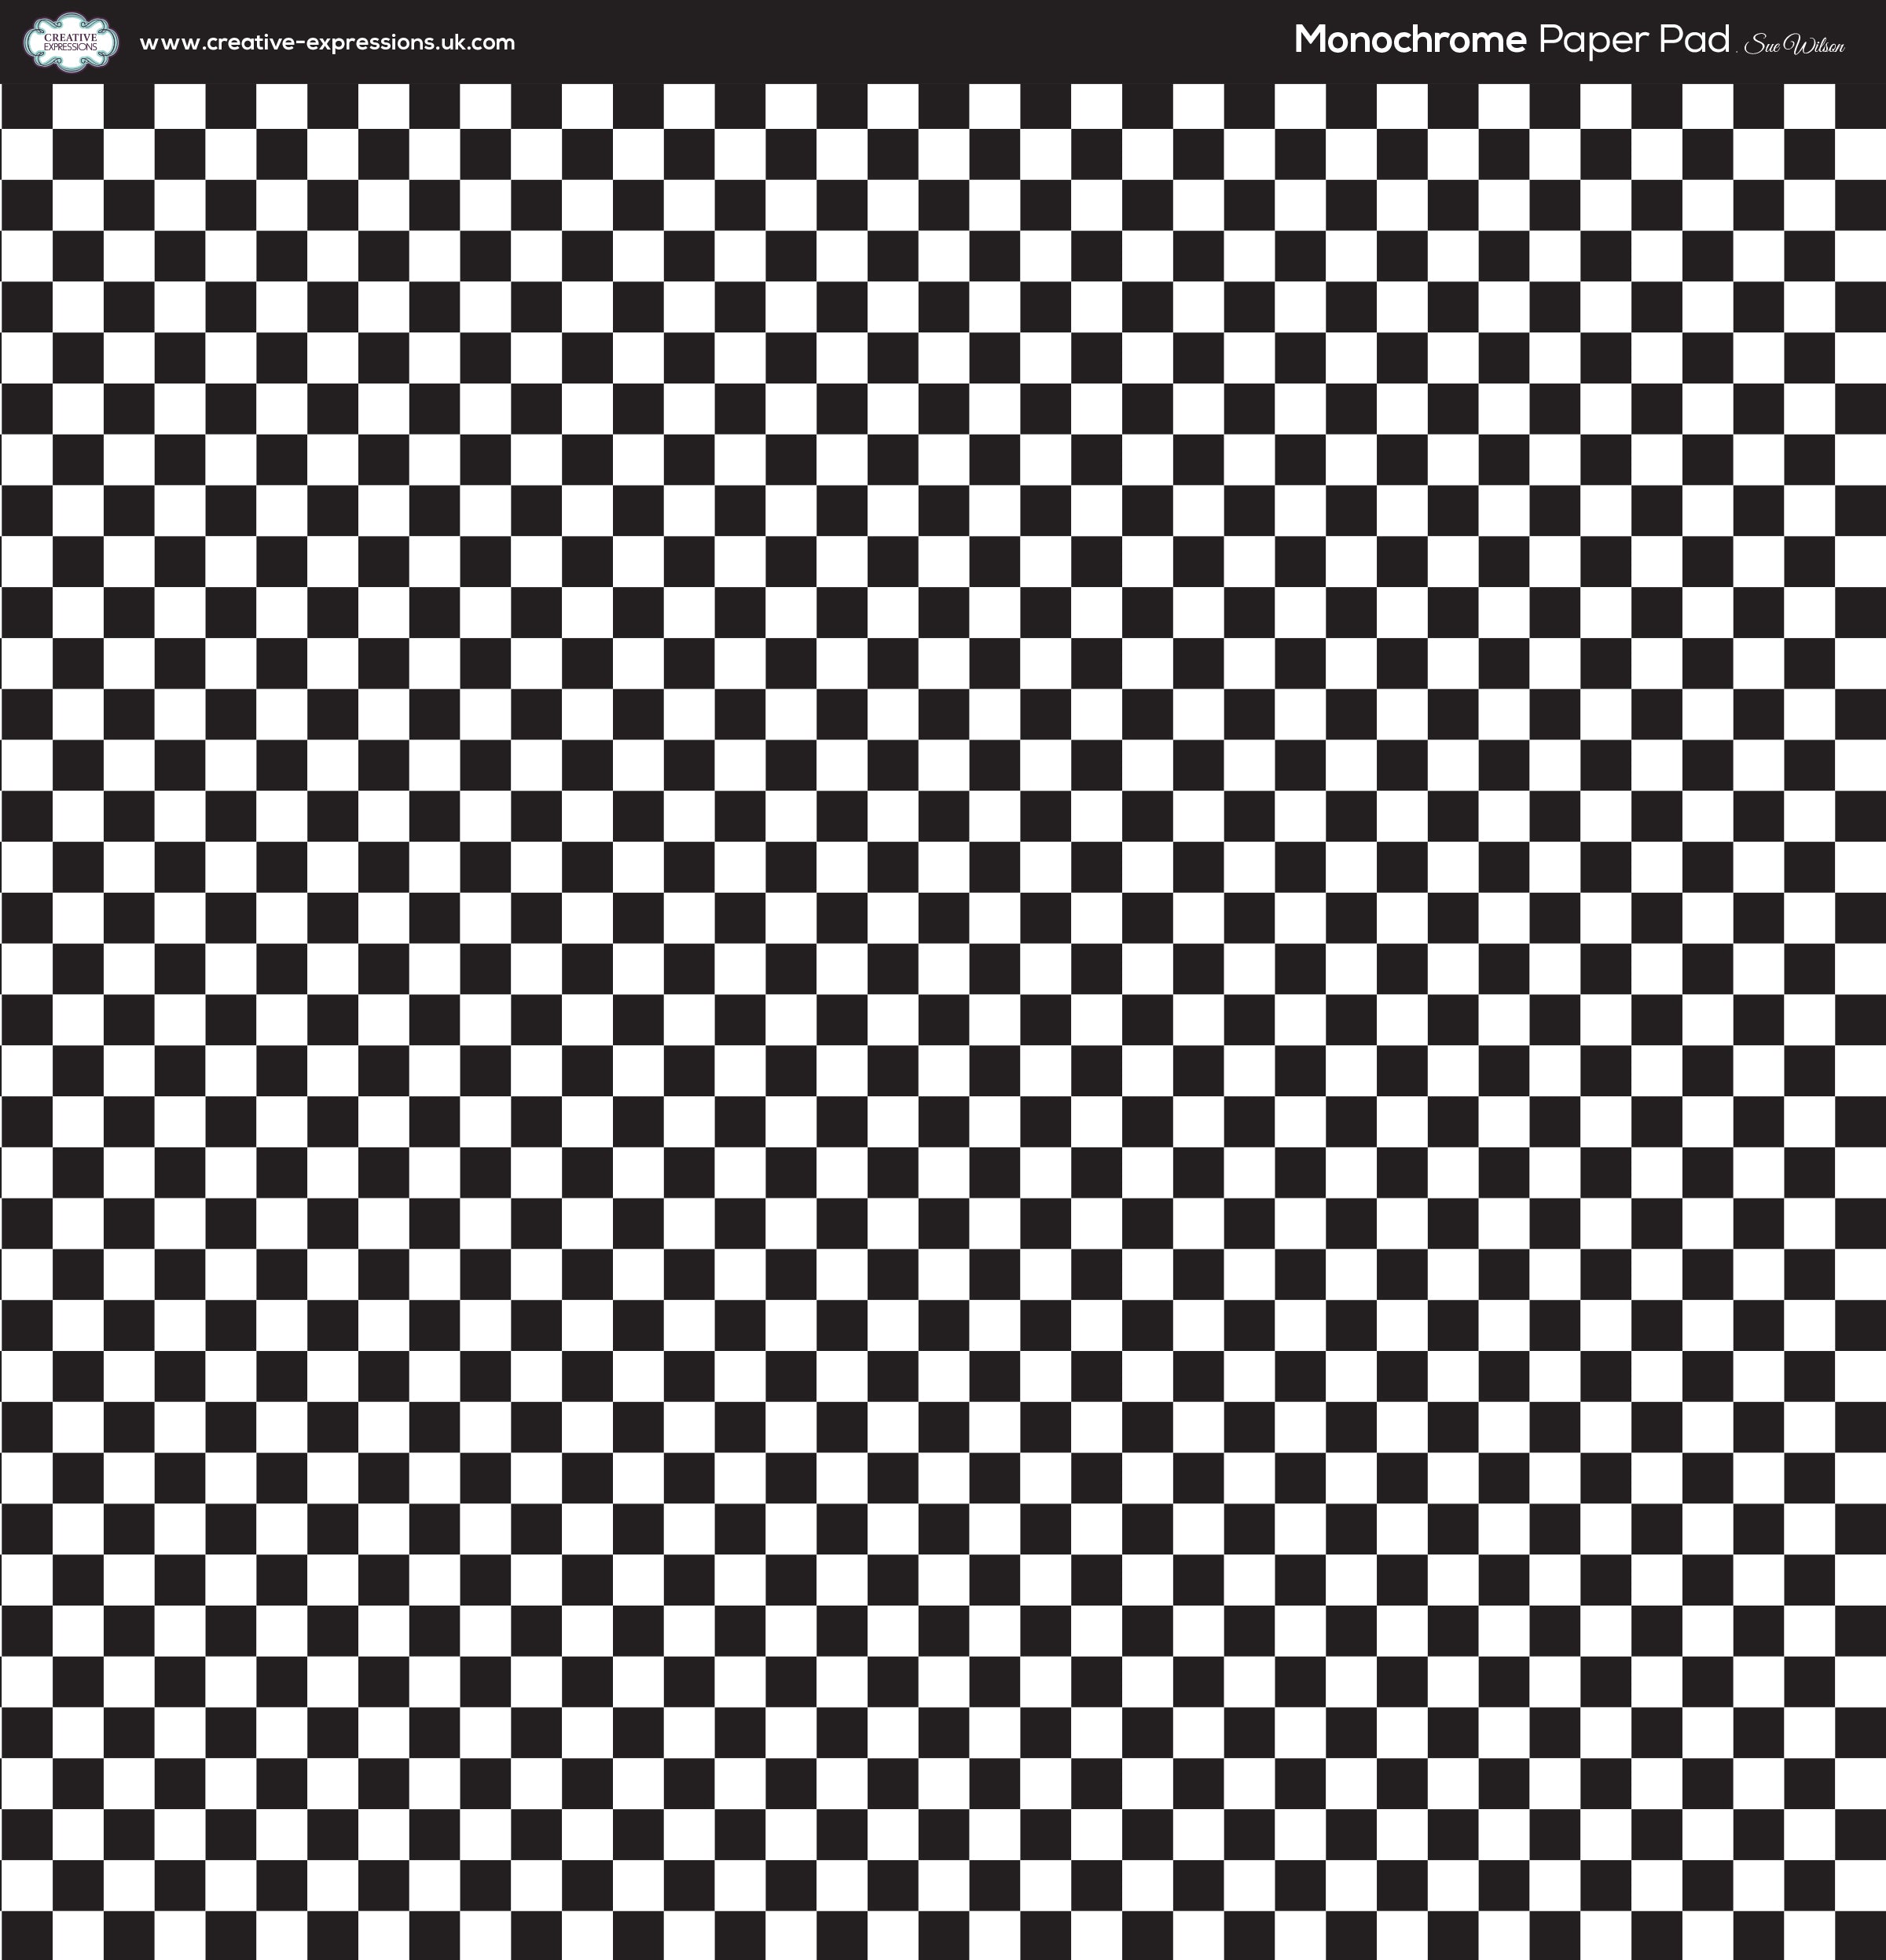 Creative Expressions Sue Wilson Monochrome Stripes 8 in x 8 in Paper Pad